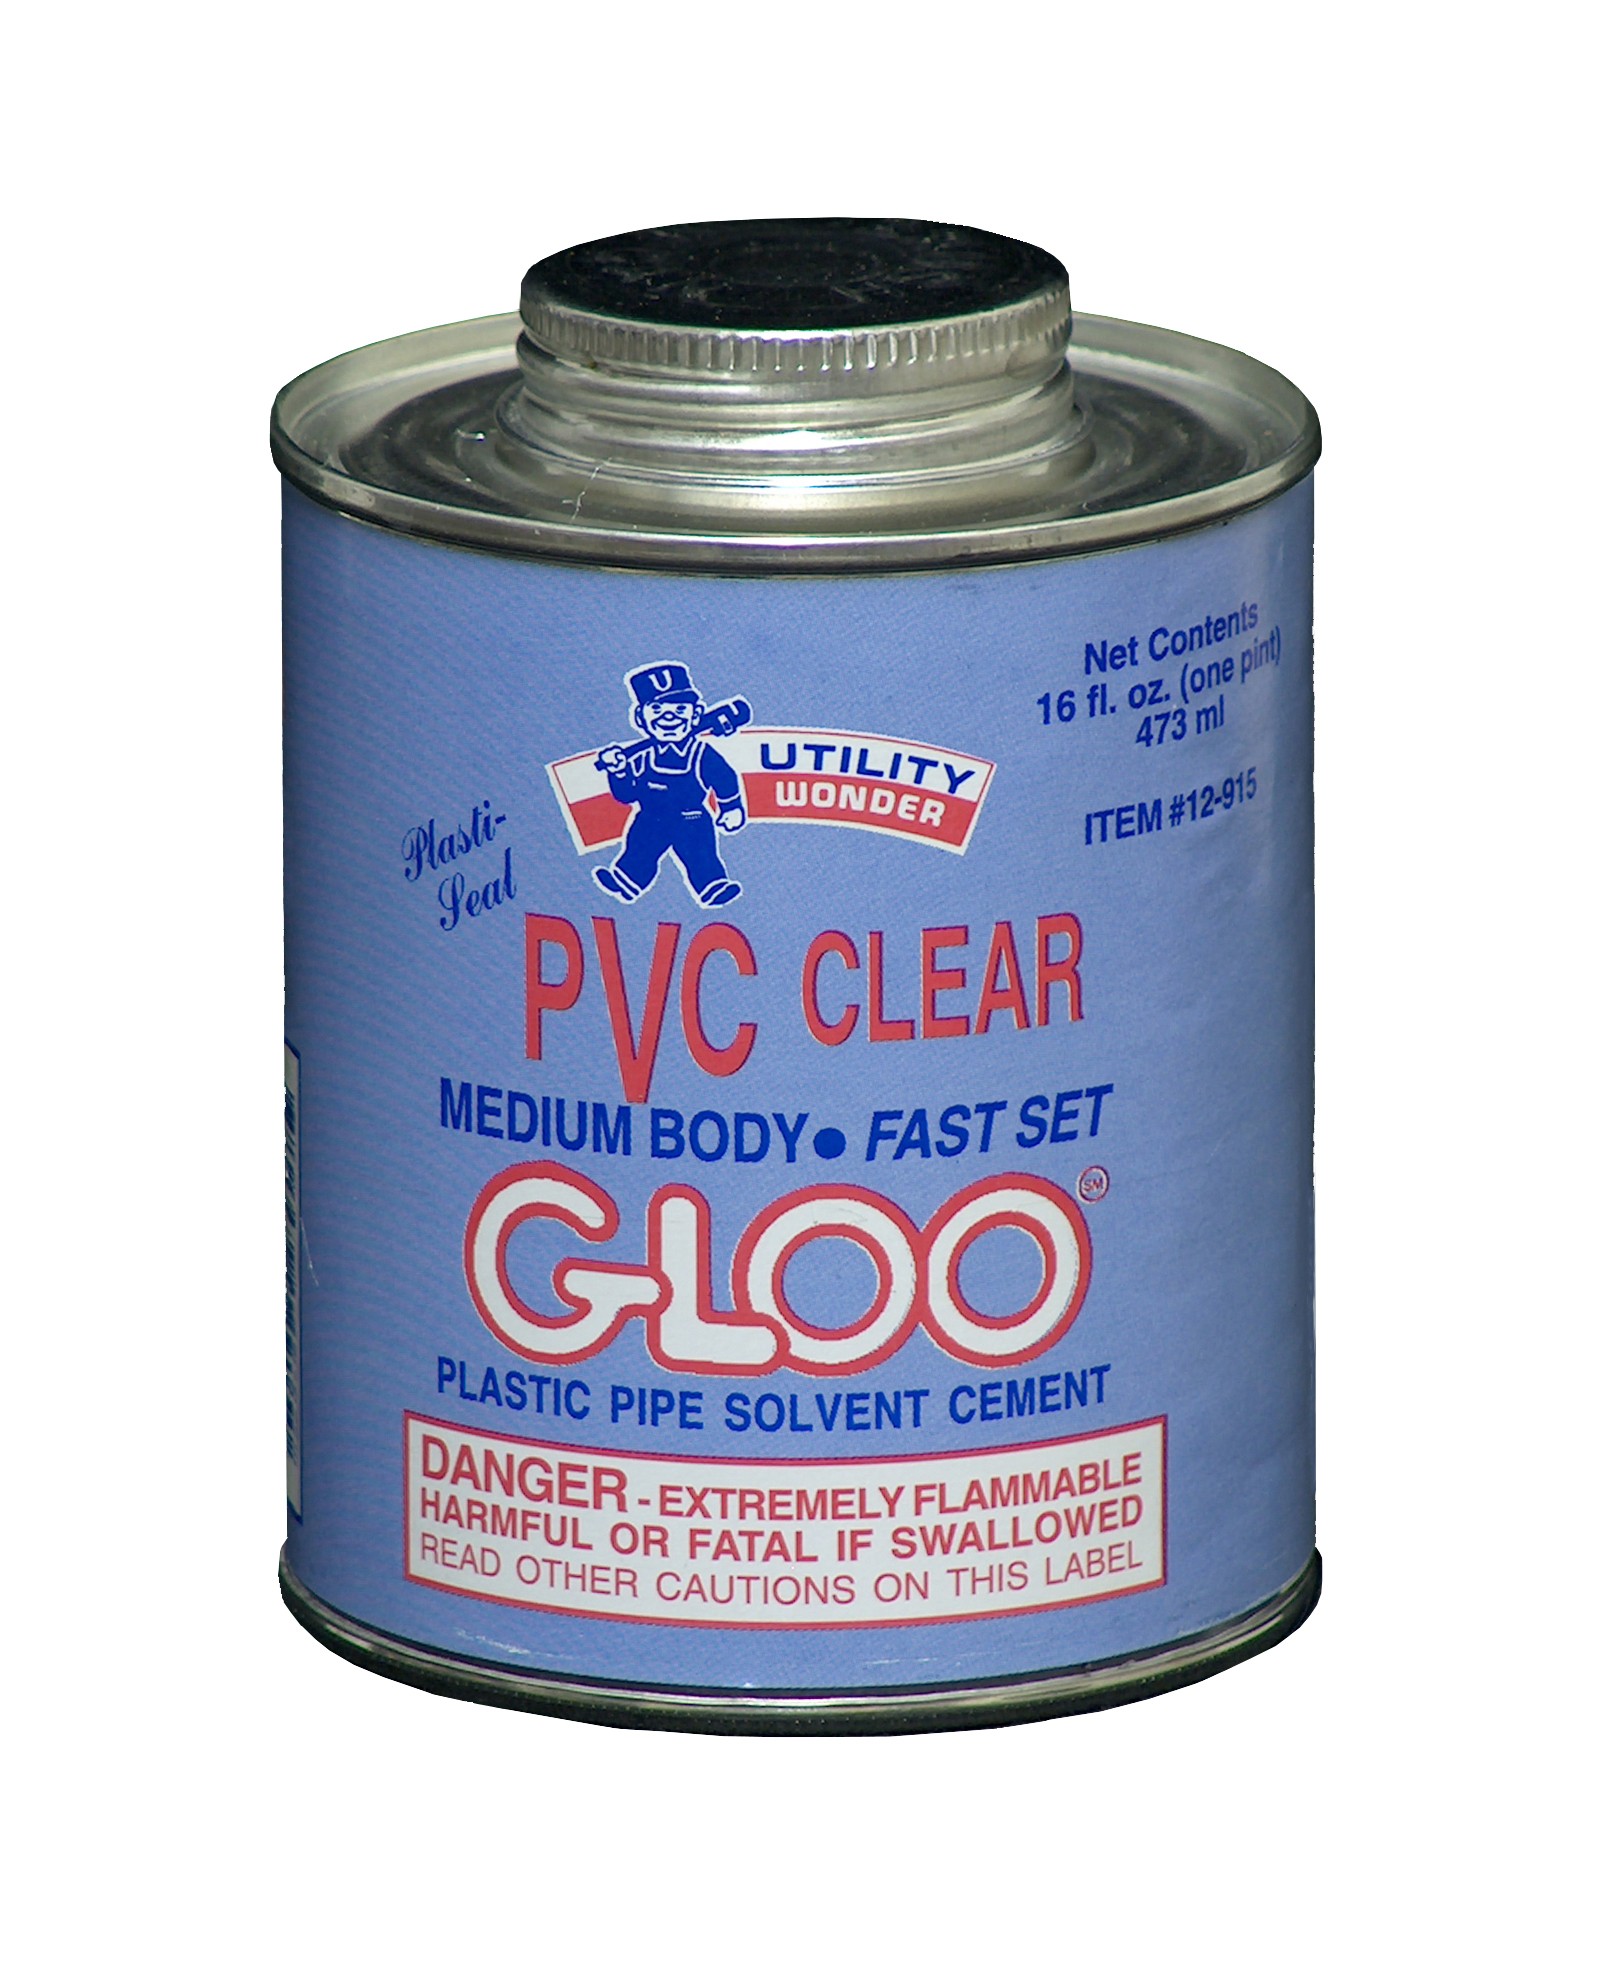 PLASTI-SEAL PVC CLEAR GLOO MEDIUM BODY SOLVENT CEMENT